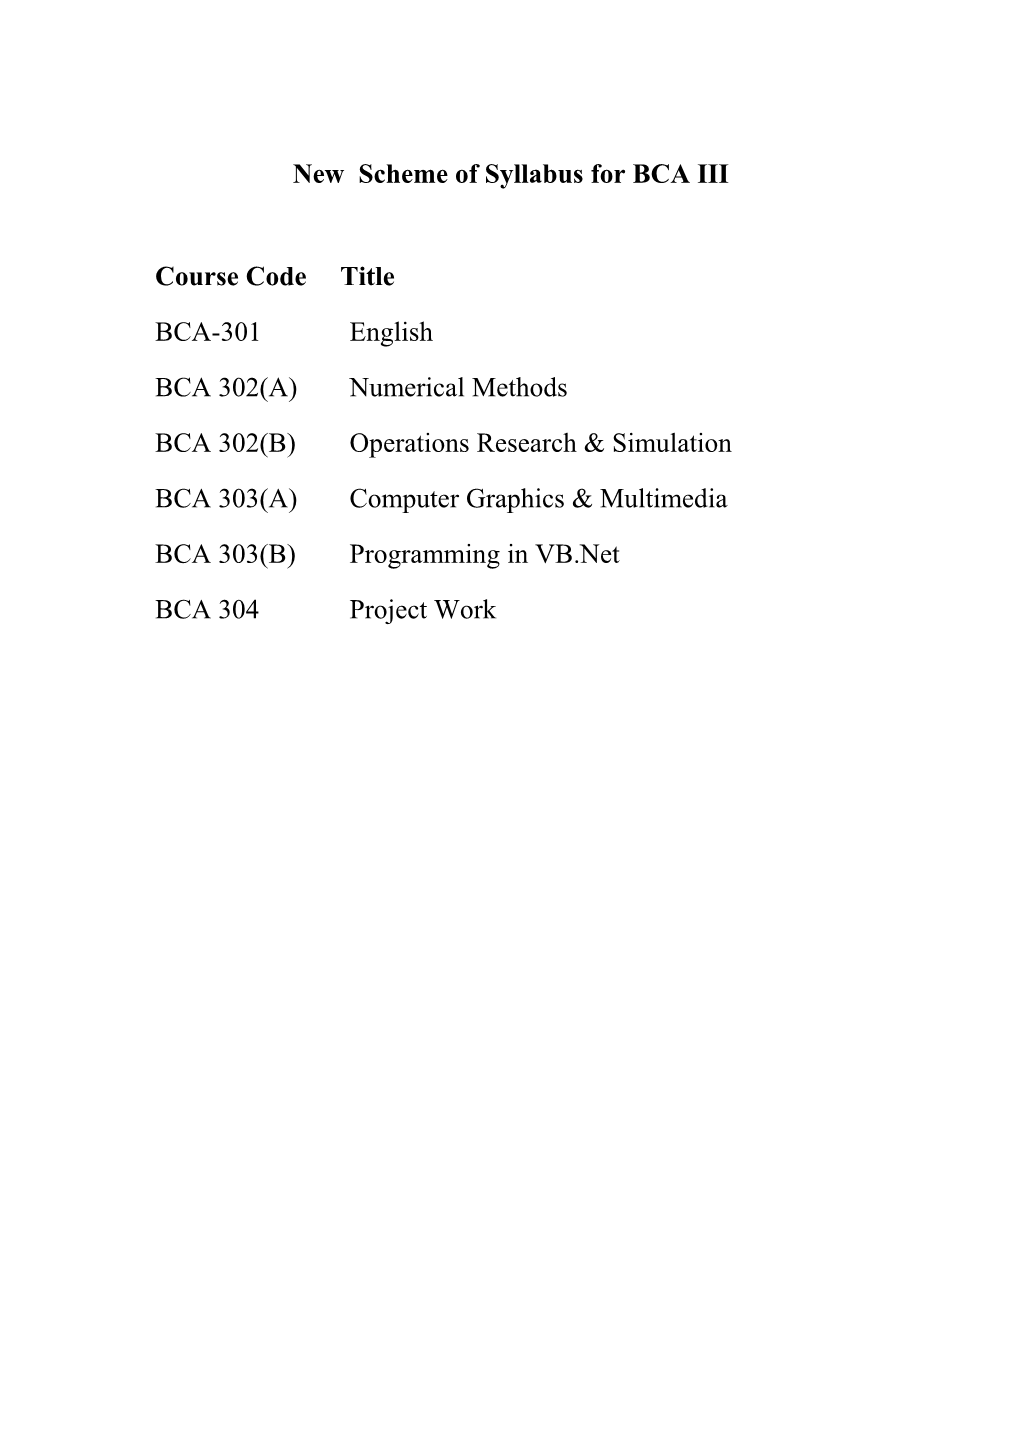 Syllabus of BCA III